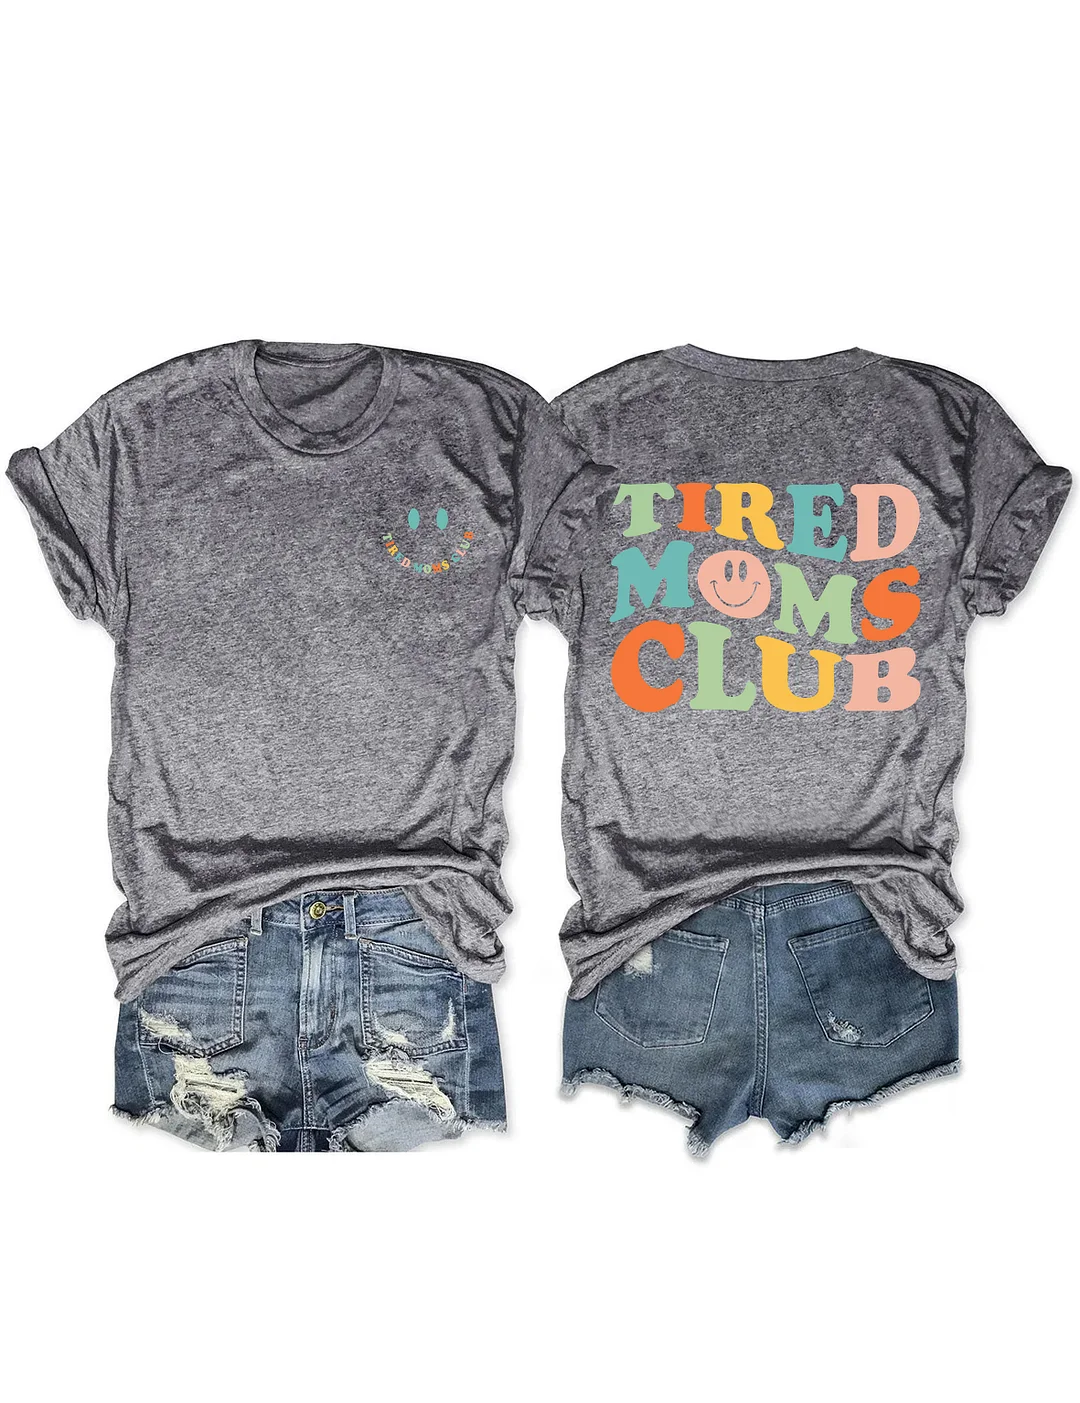 Tired Moms Club T-shirt